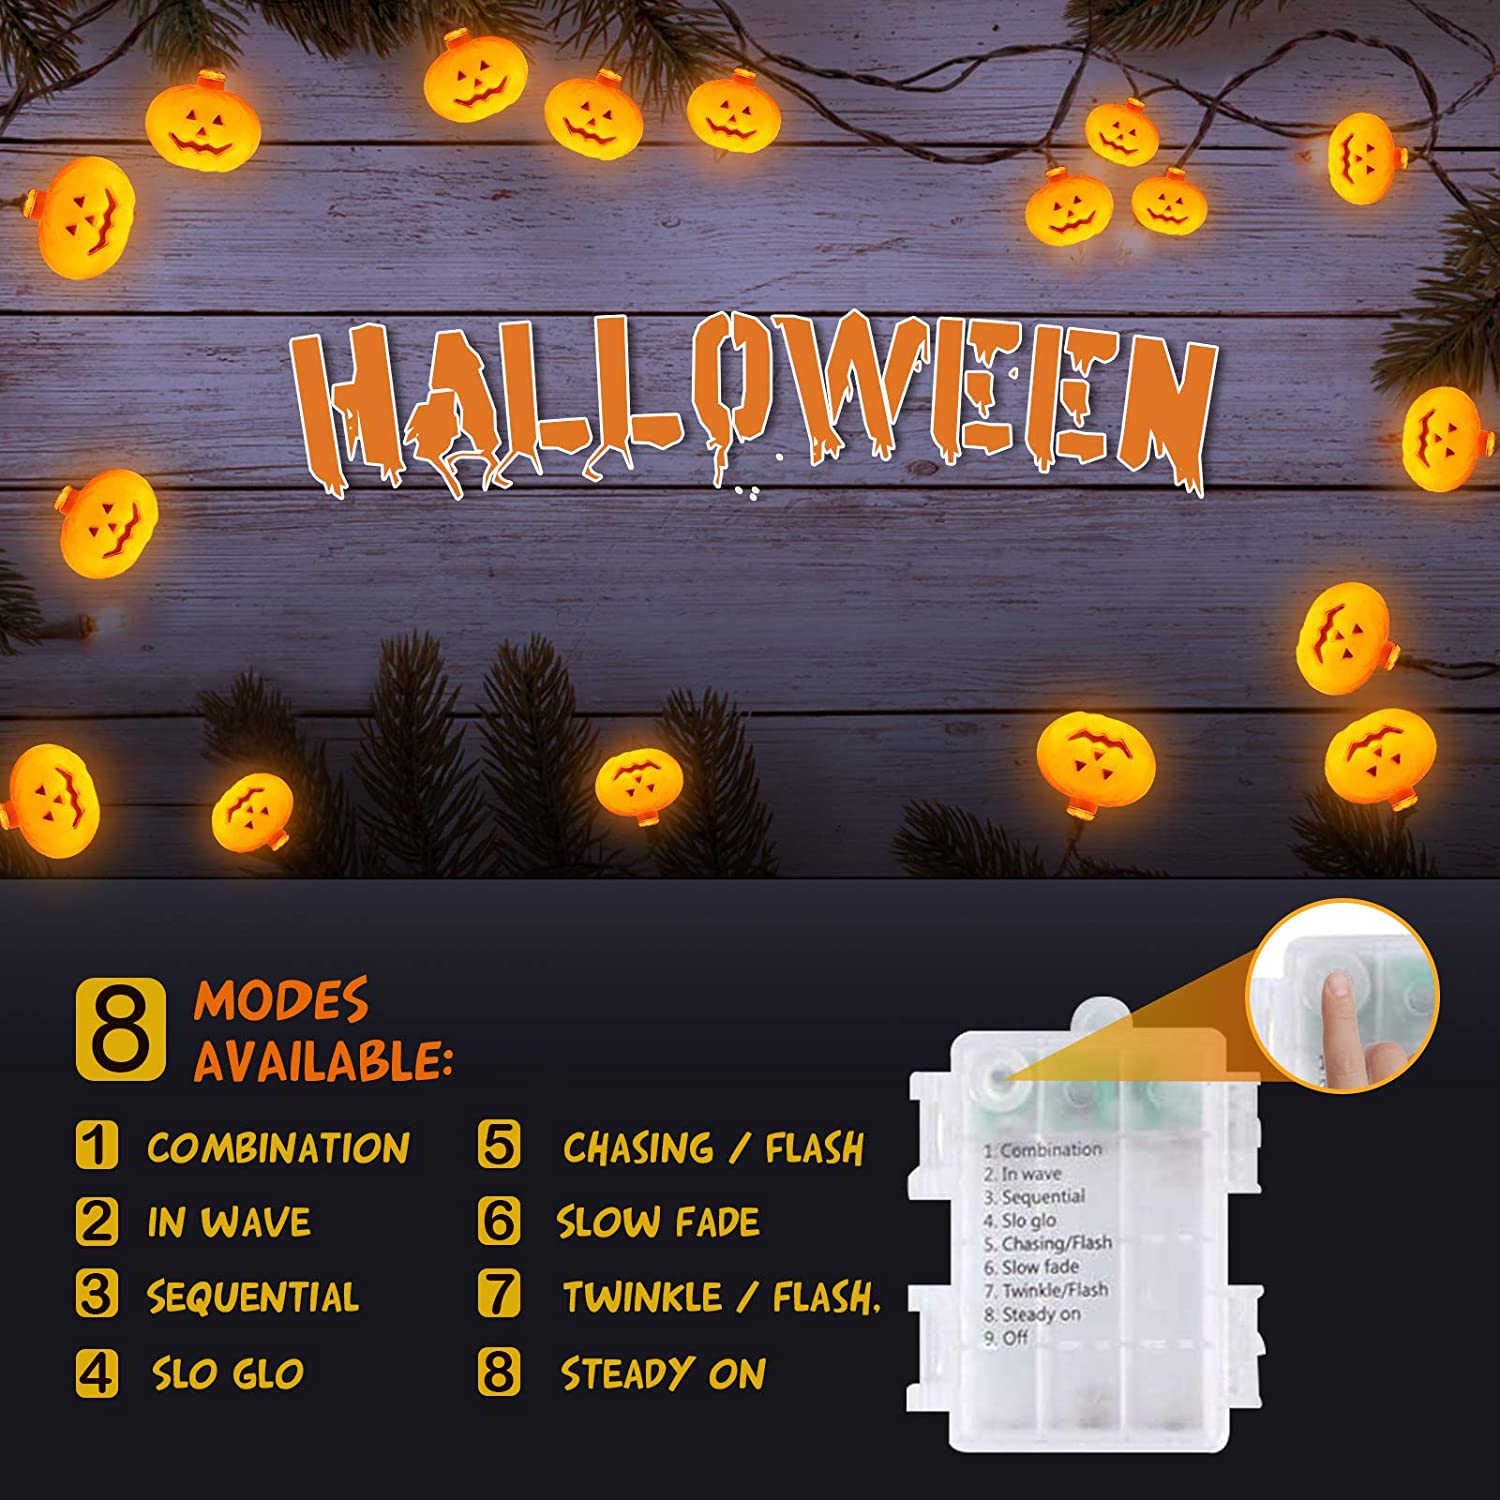 98ft-Halloween-Decorations-20-LED-Pumpkin-String-Lights-Home-Garden-Decor-Warm-White-1890365-3